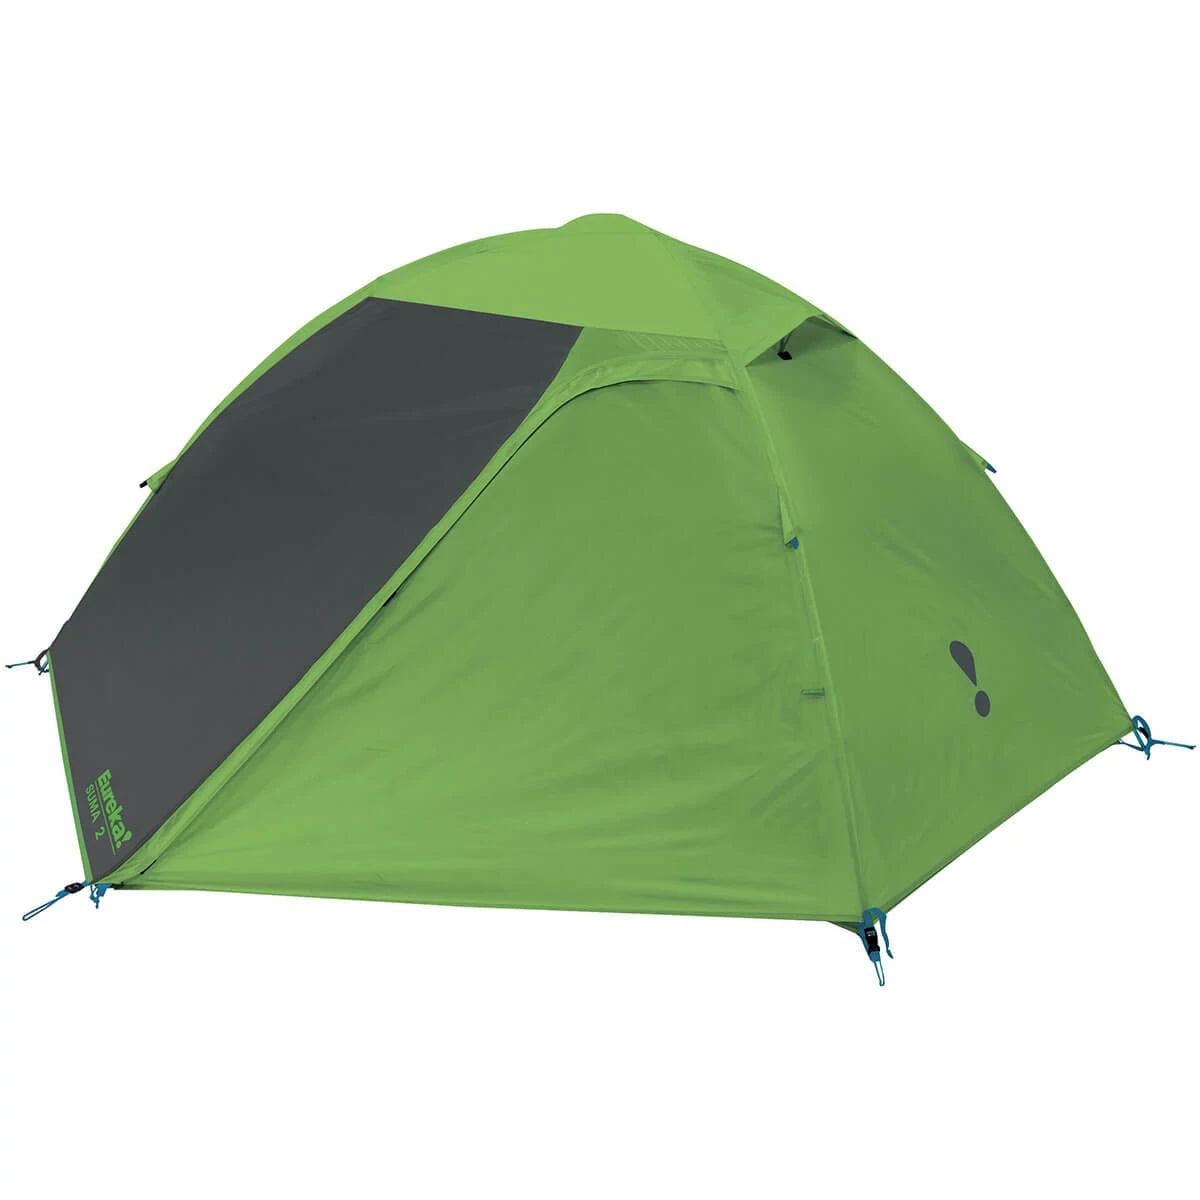 Suma 2 backpacking tent